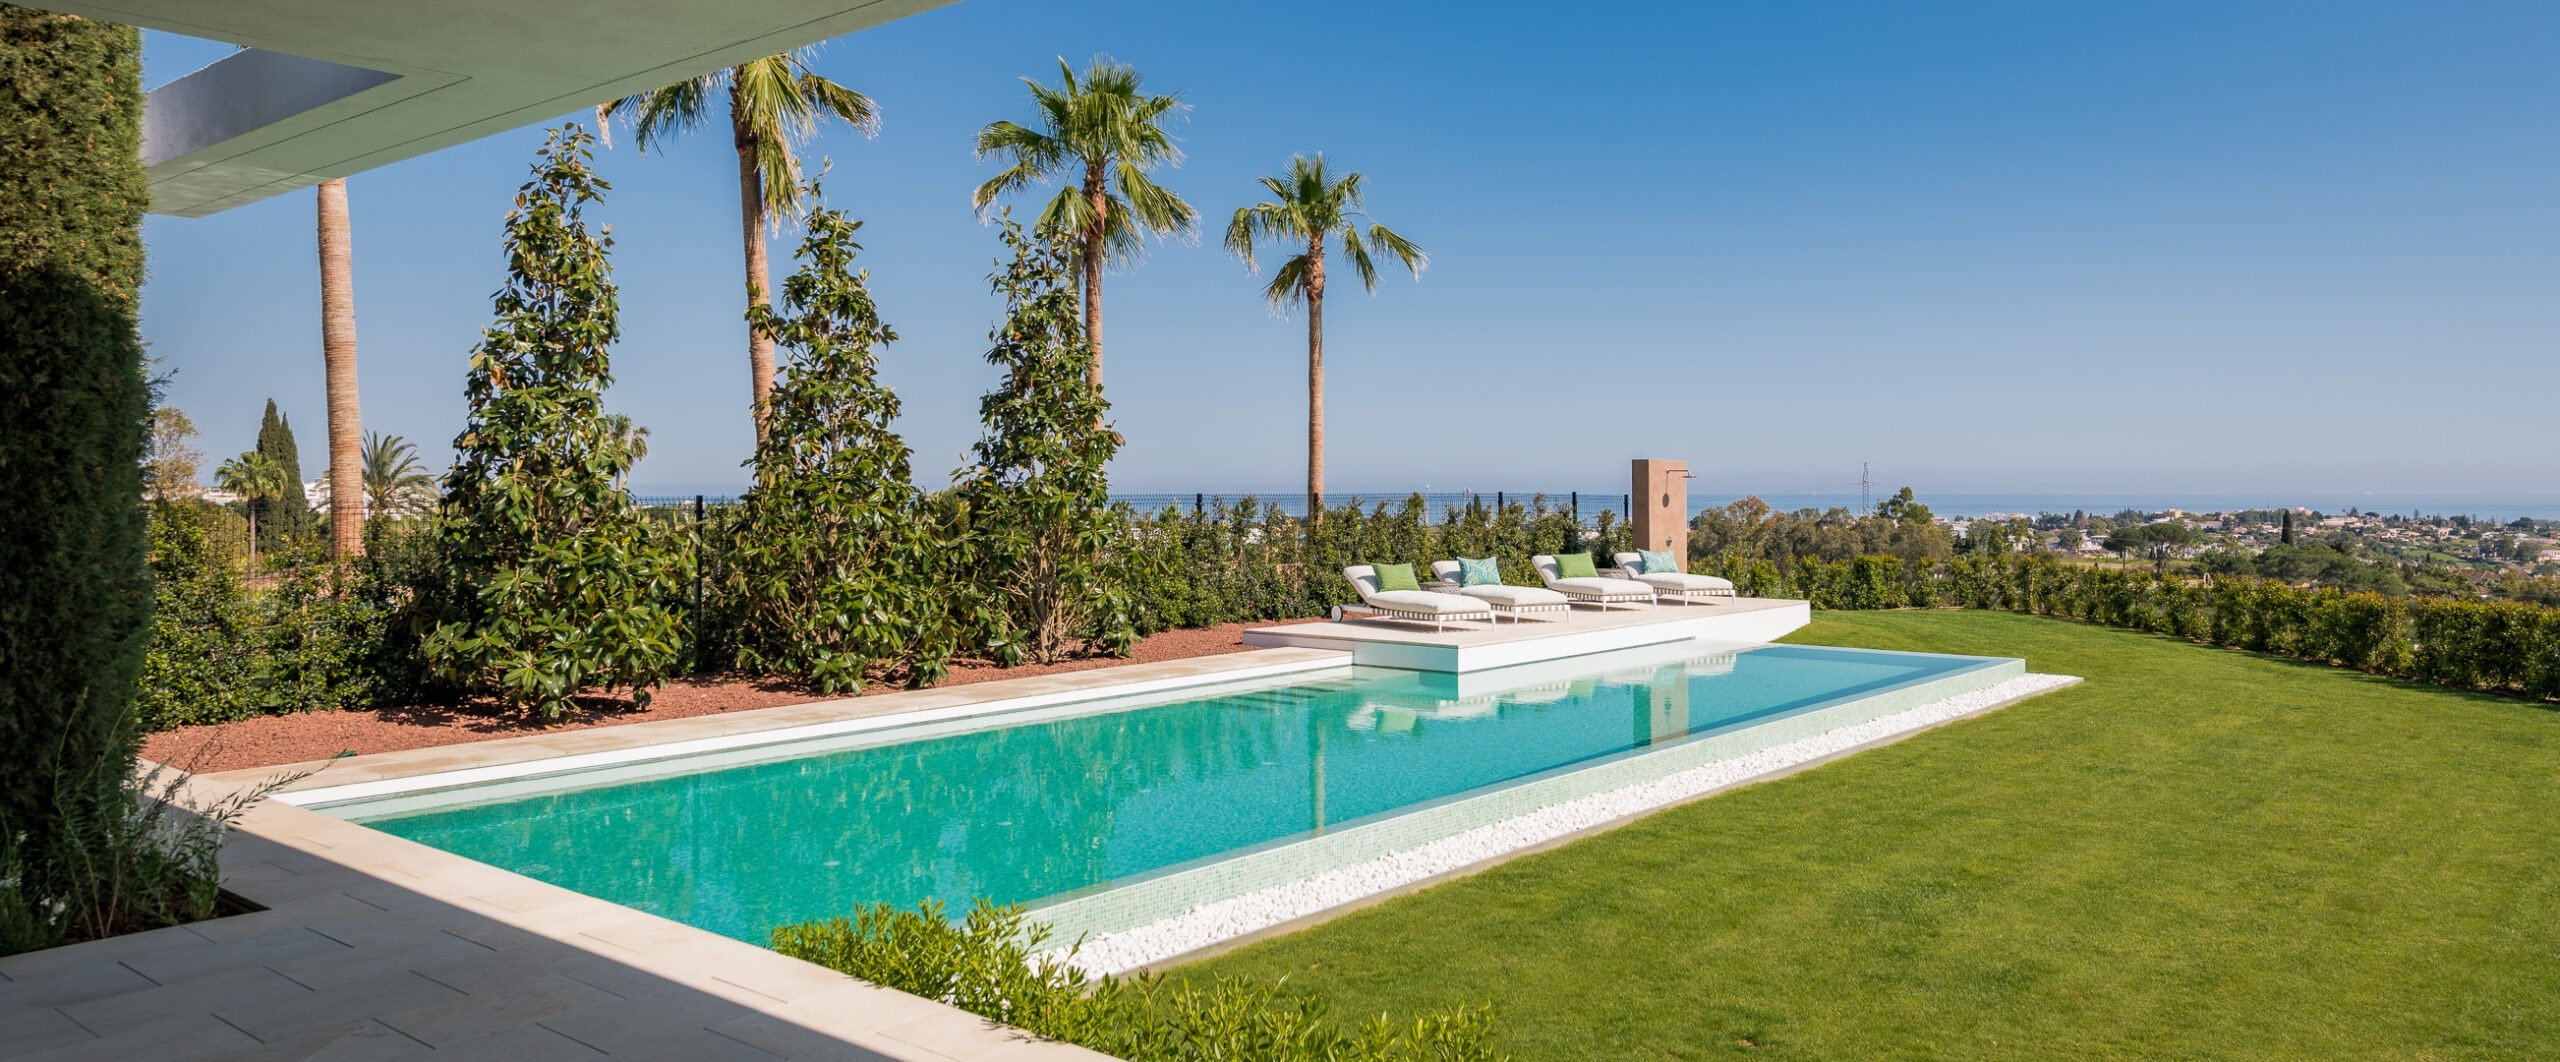 Exclusive top villa pool - El Herrojo - Benahavis